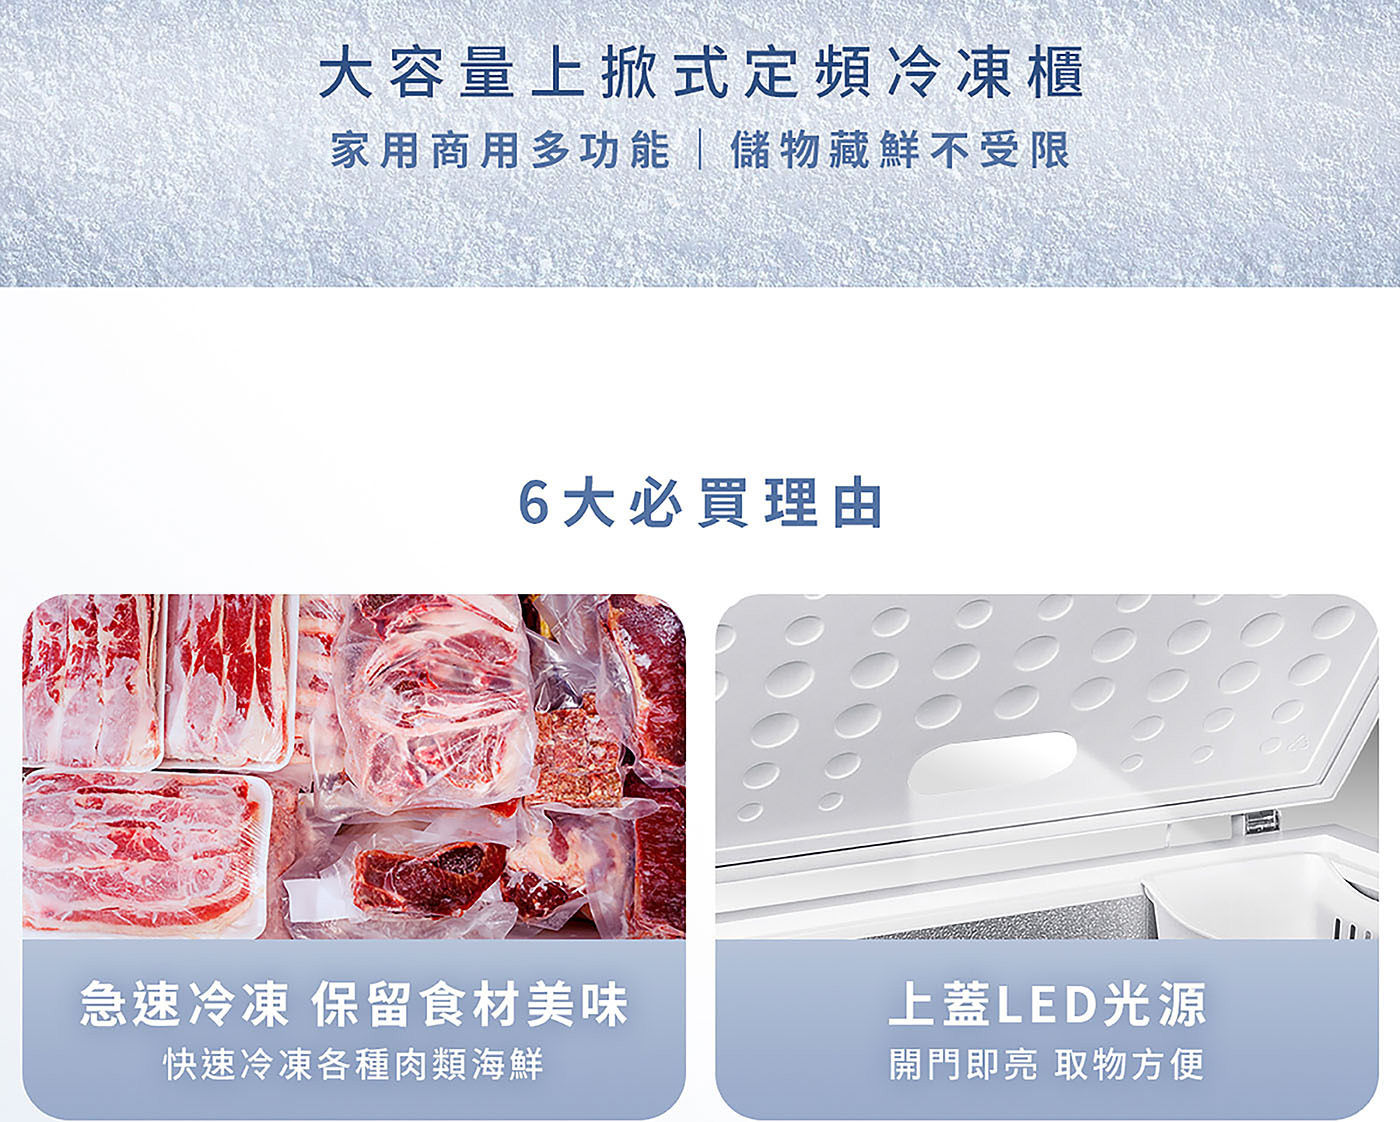 TCL 200公升 臥式定頻冷凍櫃 F200CFW大容量家用商用多功能/儲物藏鮮不受限/急速冷凍保留食材美味/上蓋LED光源